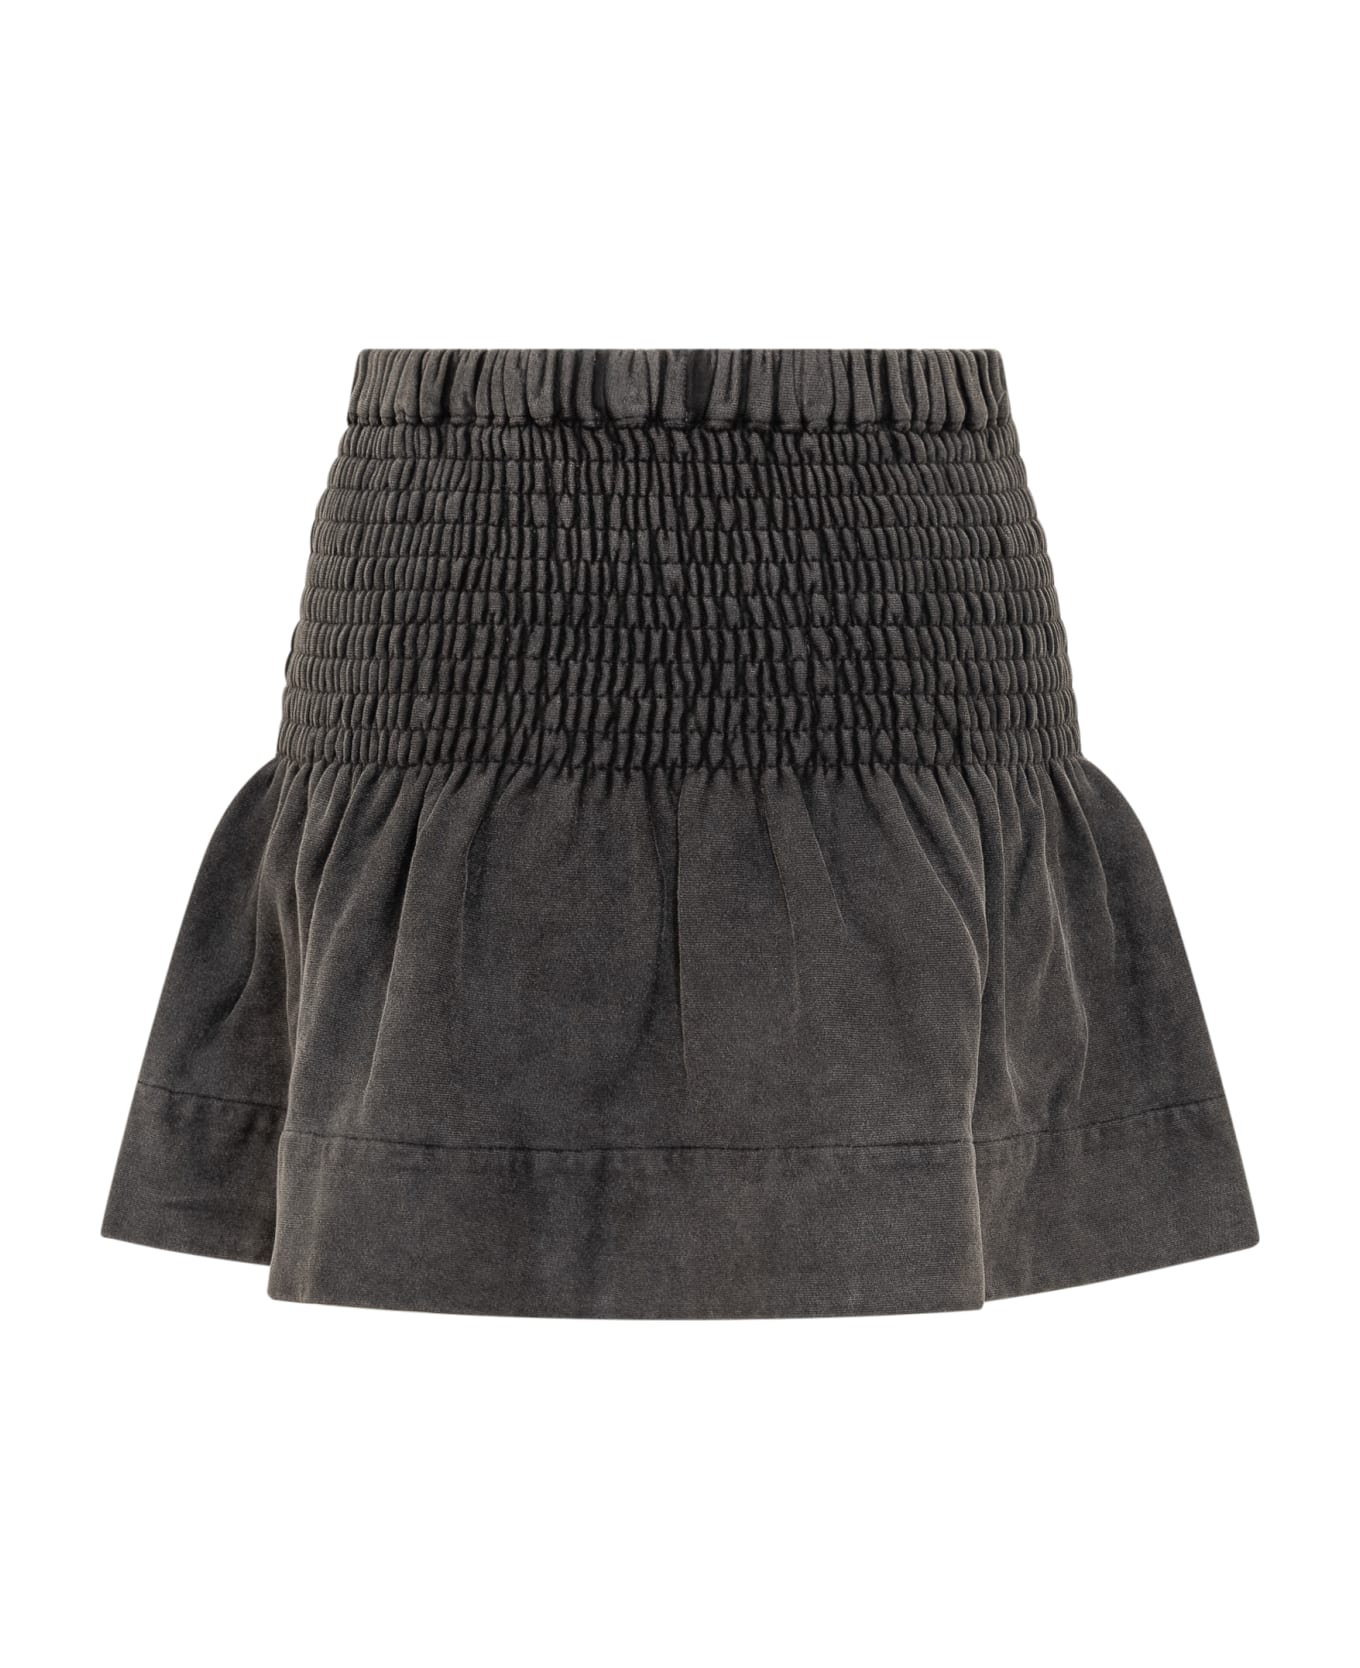 Marant Étoile Pacifica Skirt - Fk Faded Black